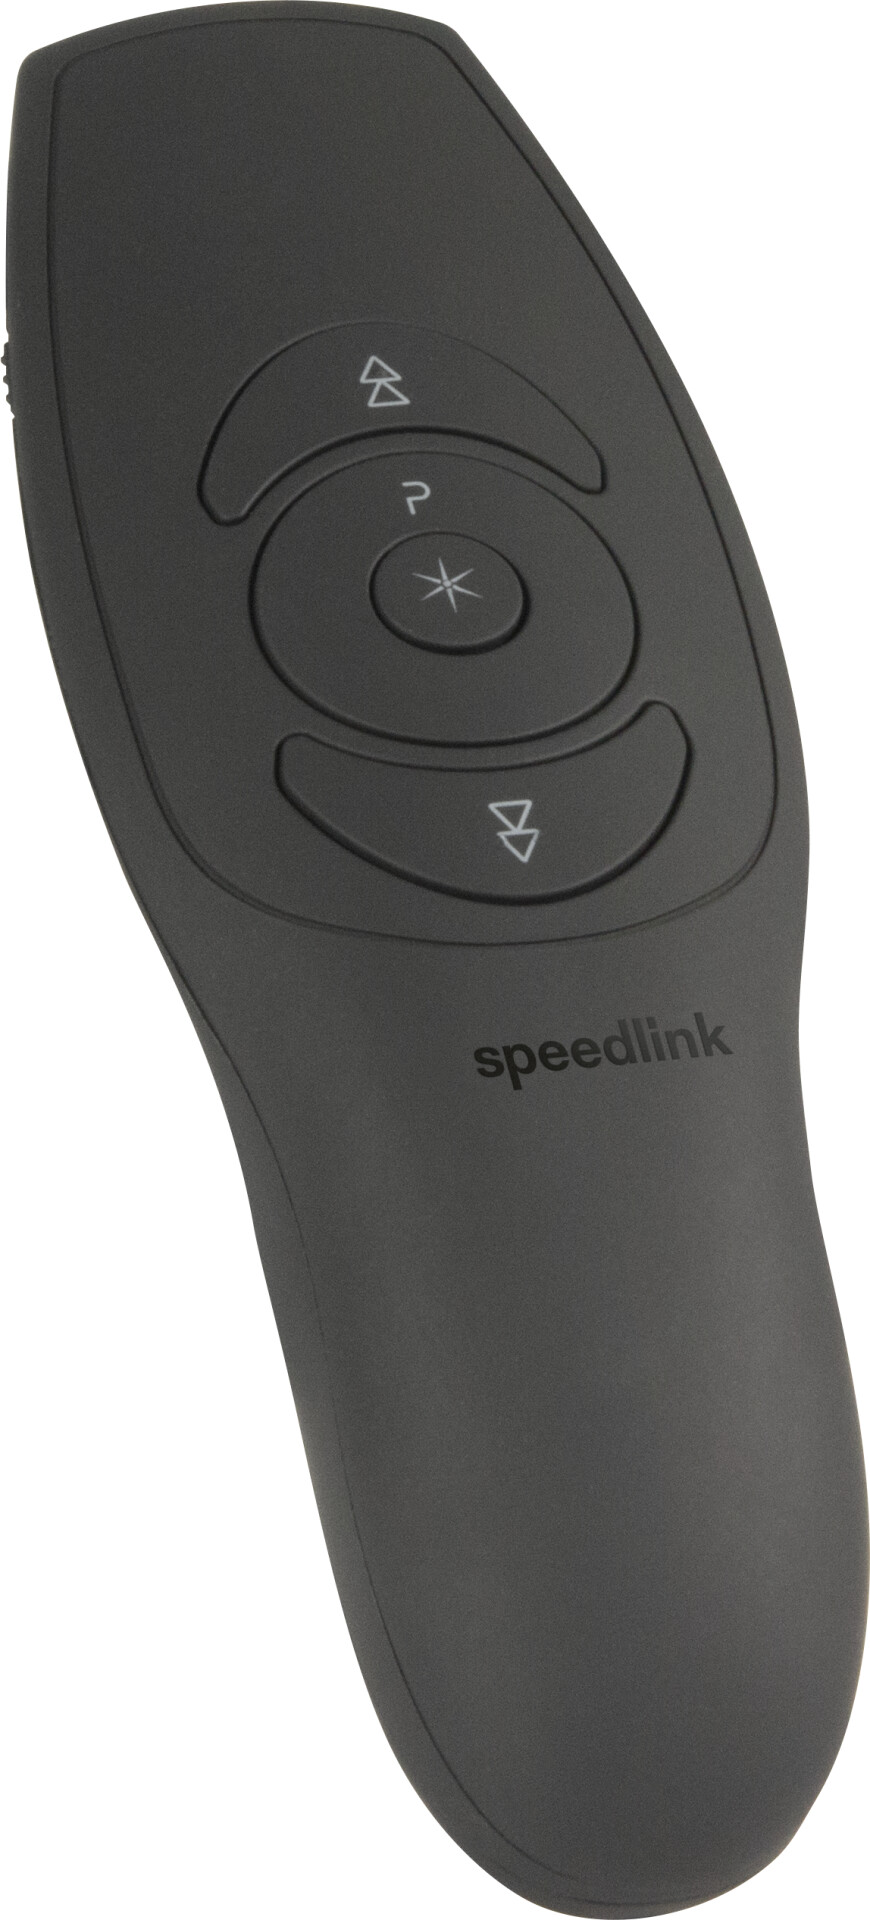 Speedlink - Laser Presenter - Acute Pure - Sort